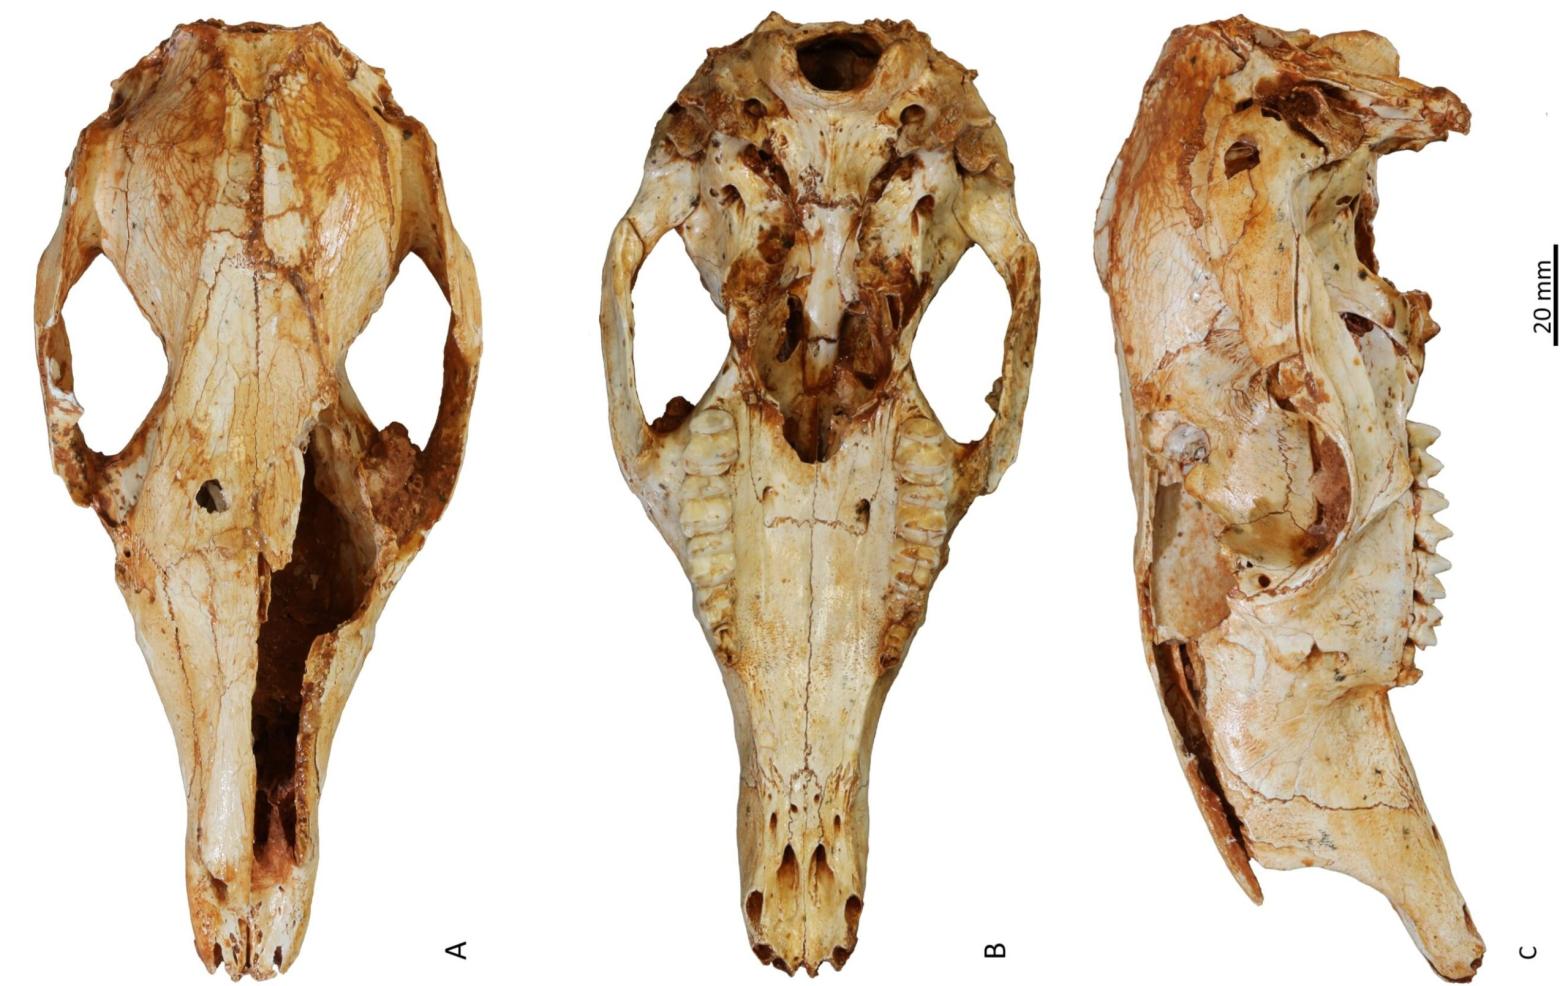 Skulls of the newly described extinct kangaroo. (Image: N. Warburton, Murdoch University)